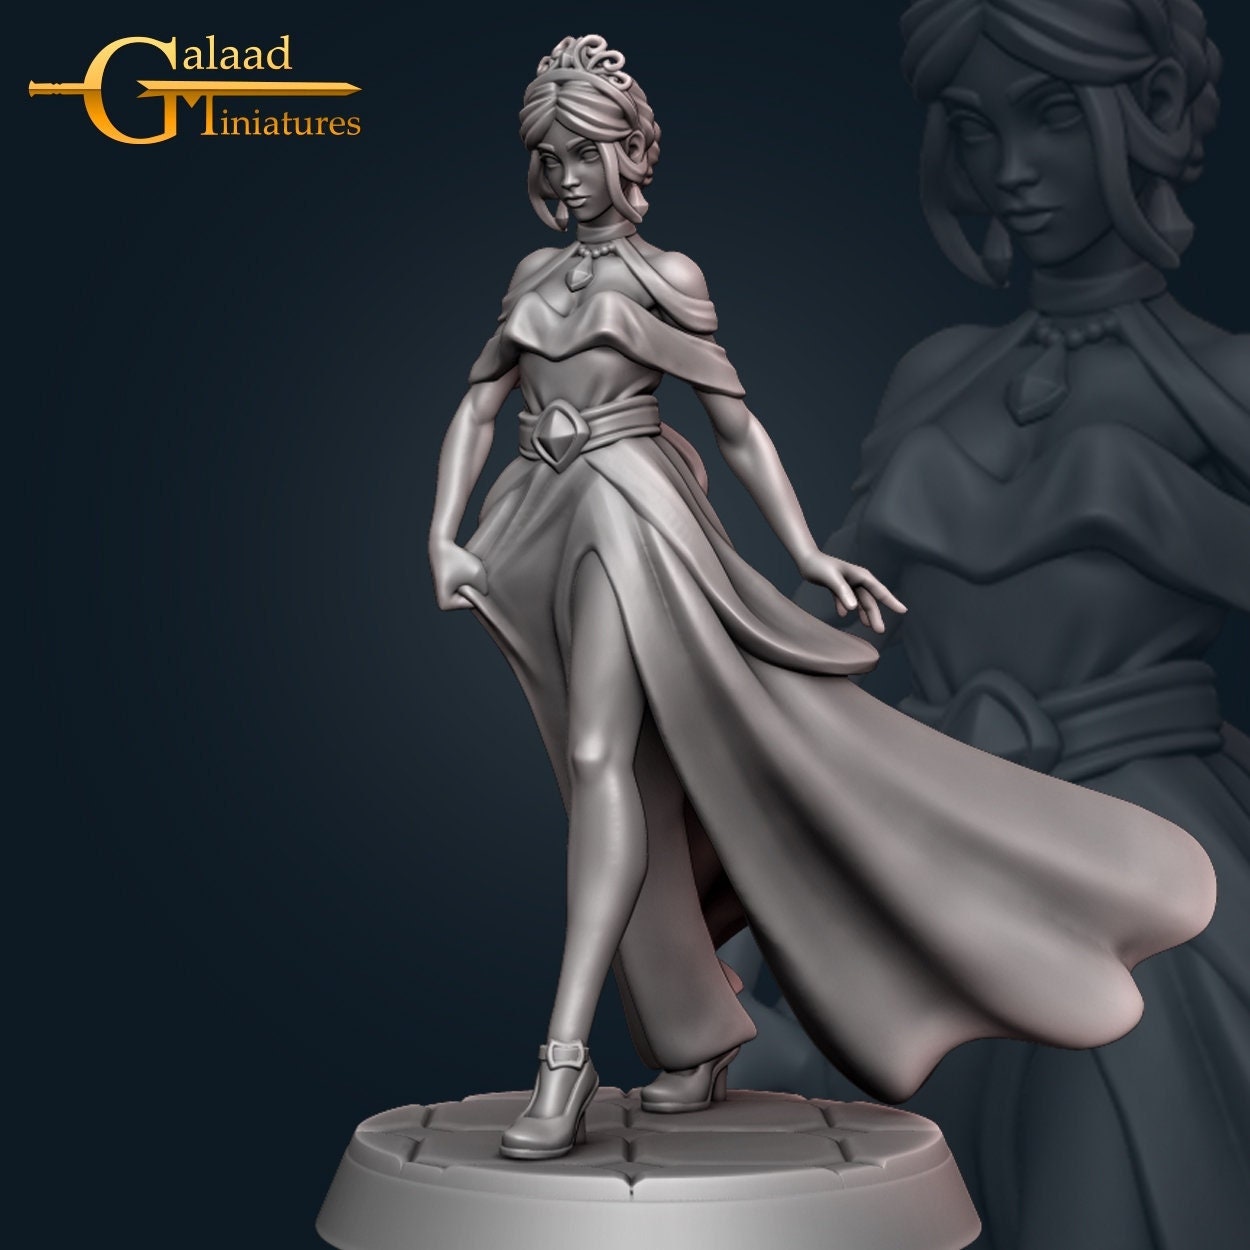 Human Princess D&D miniature, by Galaad Miniatures // 3D Print on Demand / DnD / Pathfinder / RPG